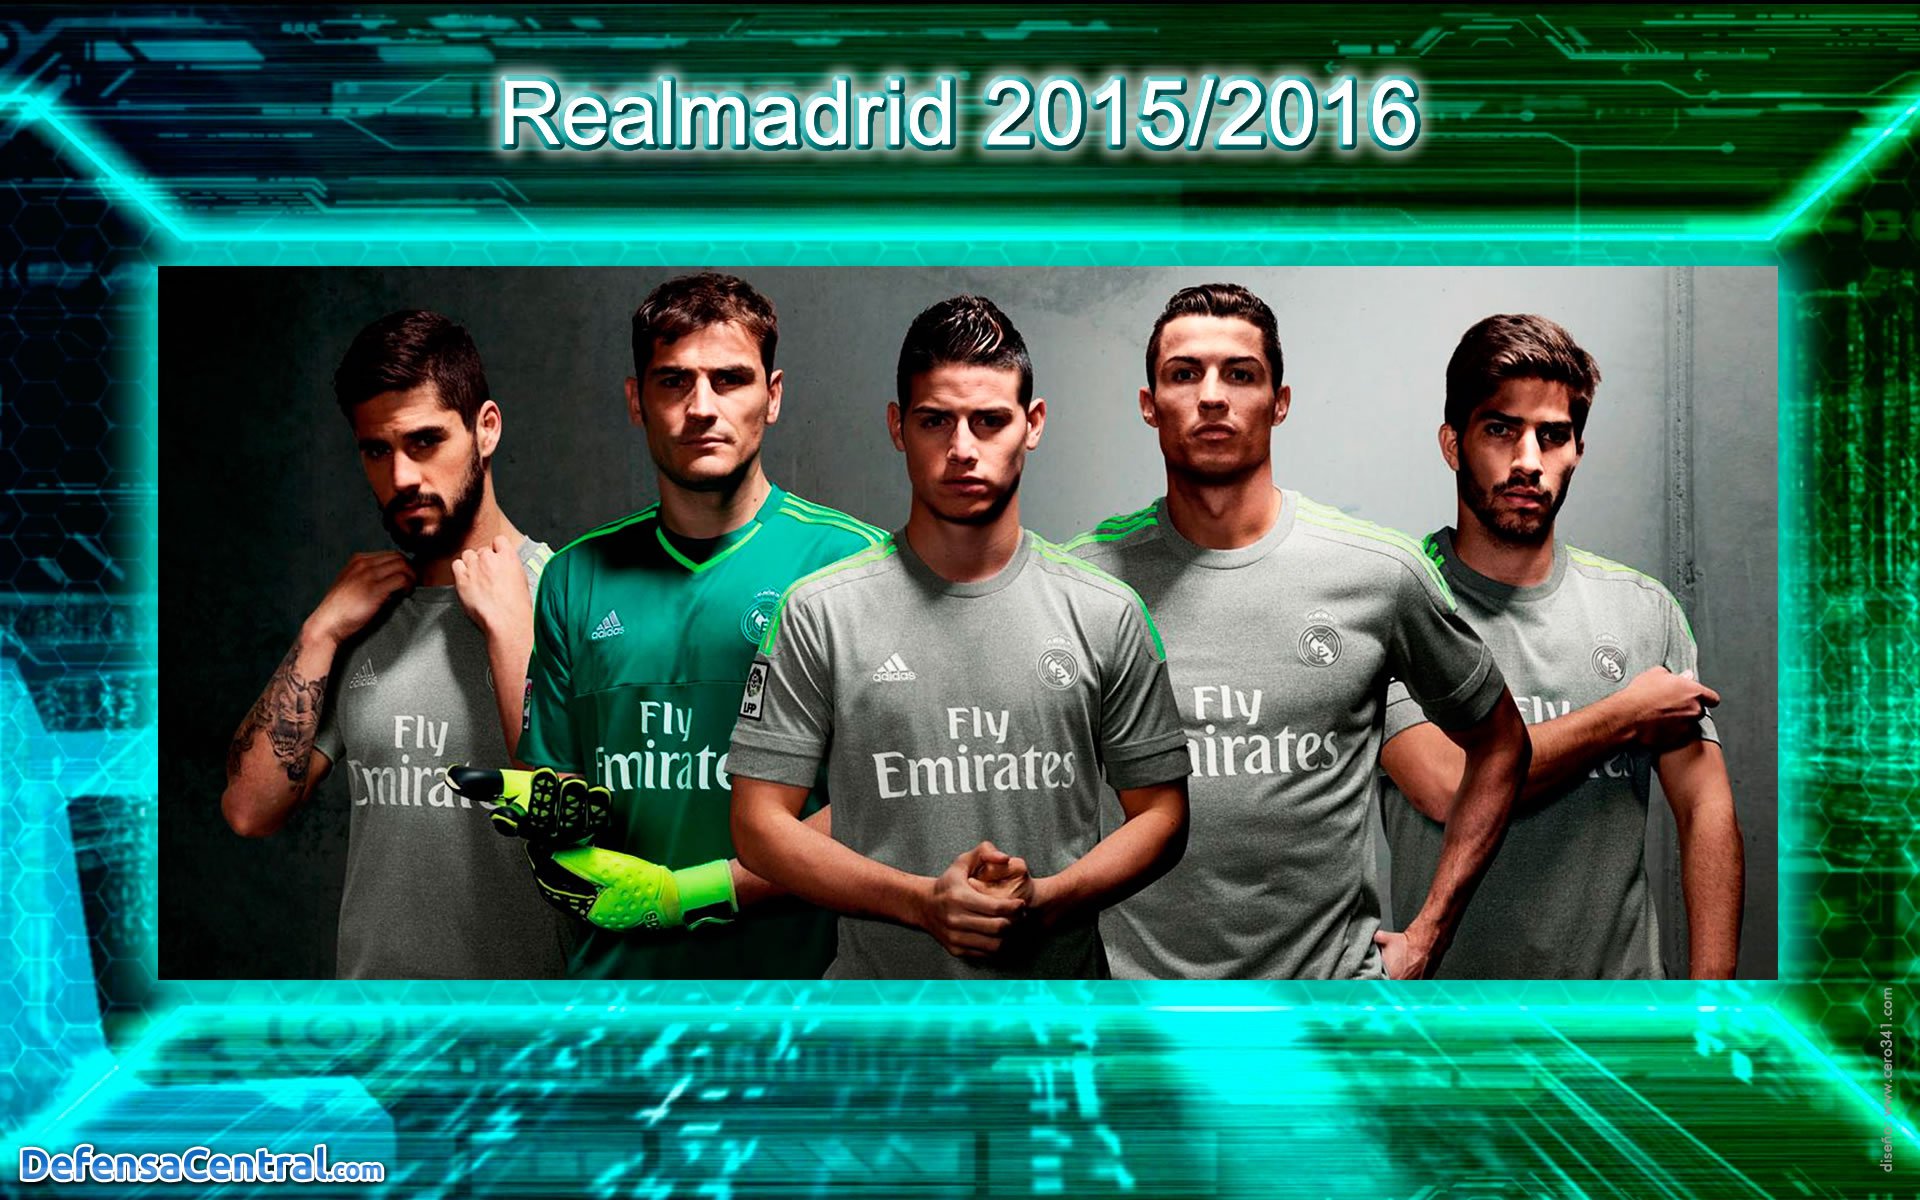 Desc Rgate El Wallpaper De Realmadrid2015 Madridismo